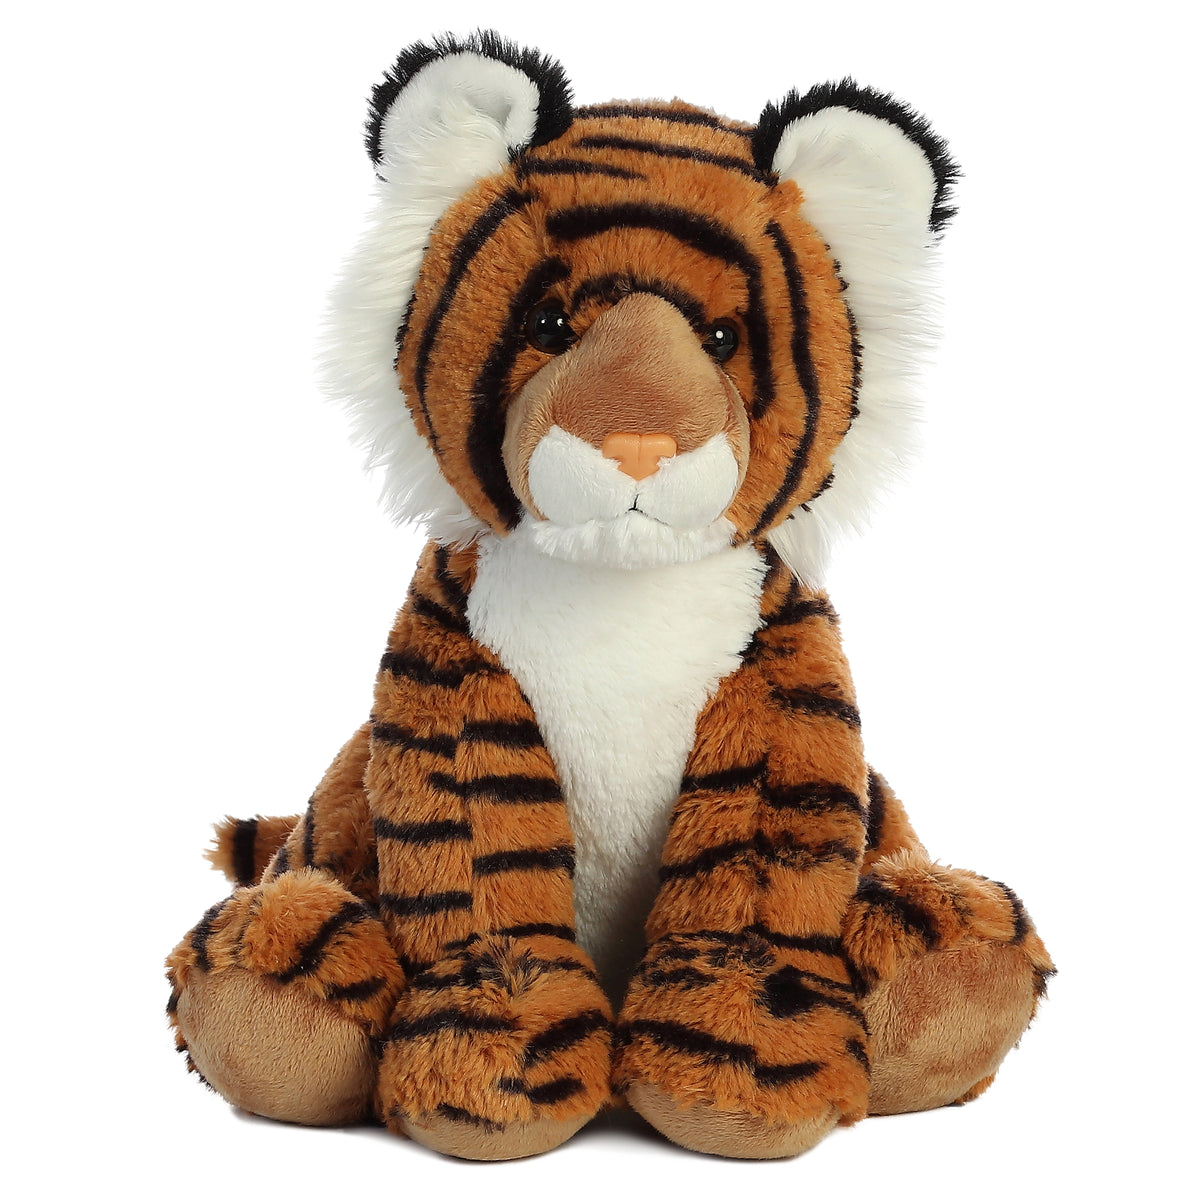 Aurora stuffed animal Jungle Royalty Bengal Tiger Plush with striped coat and piercing eyes, symbolizing majesty.